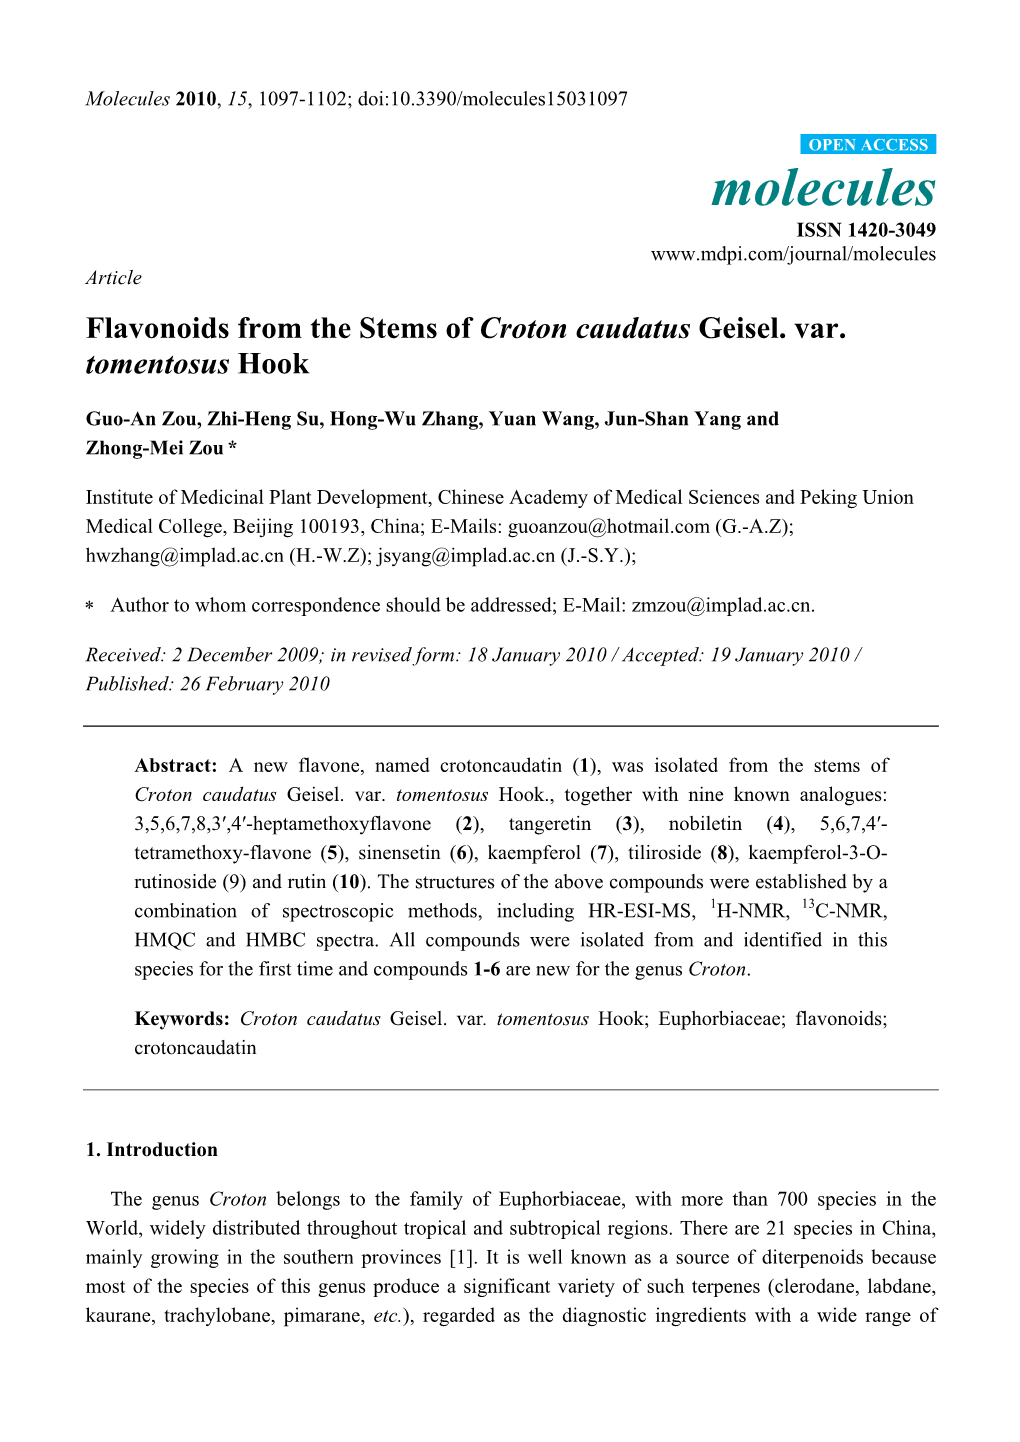 Flavonoids from the Stems of Croton Caudatus Geisel. Var. Tomentosus Hook